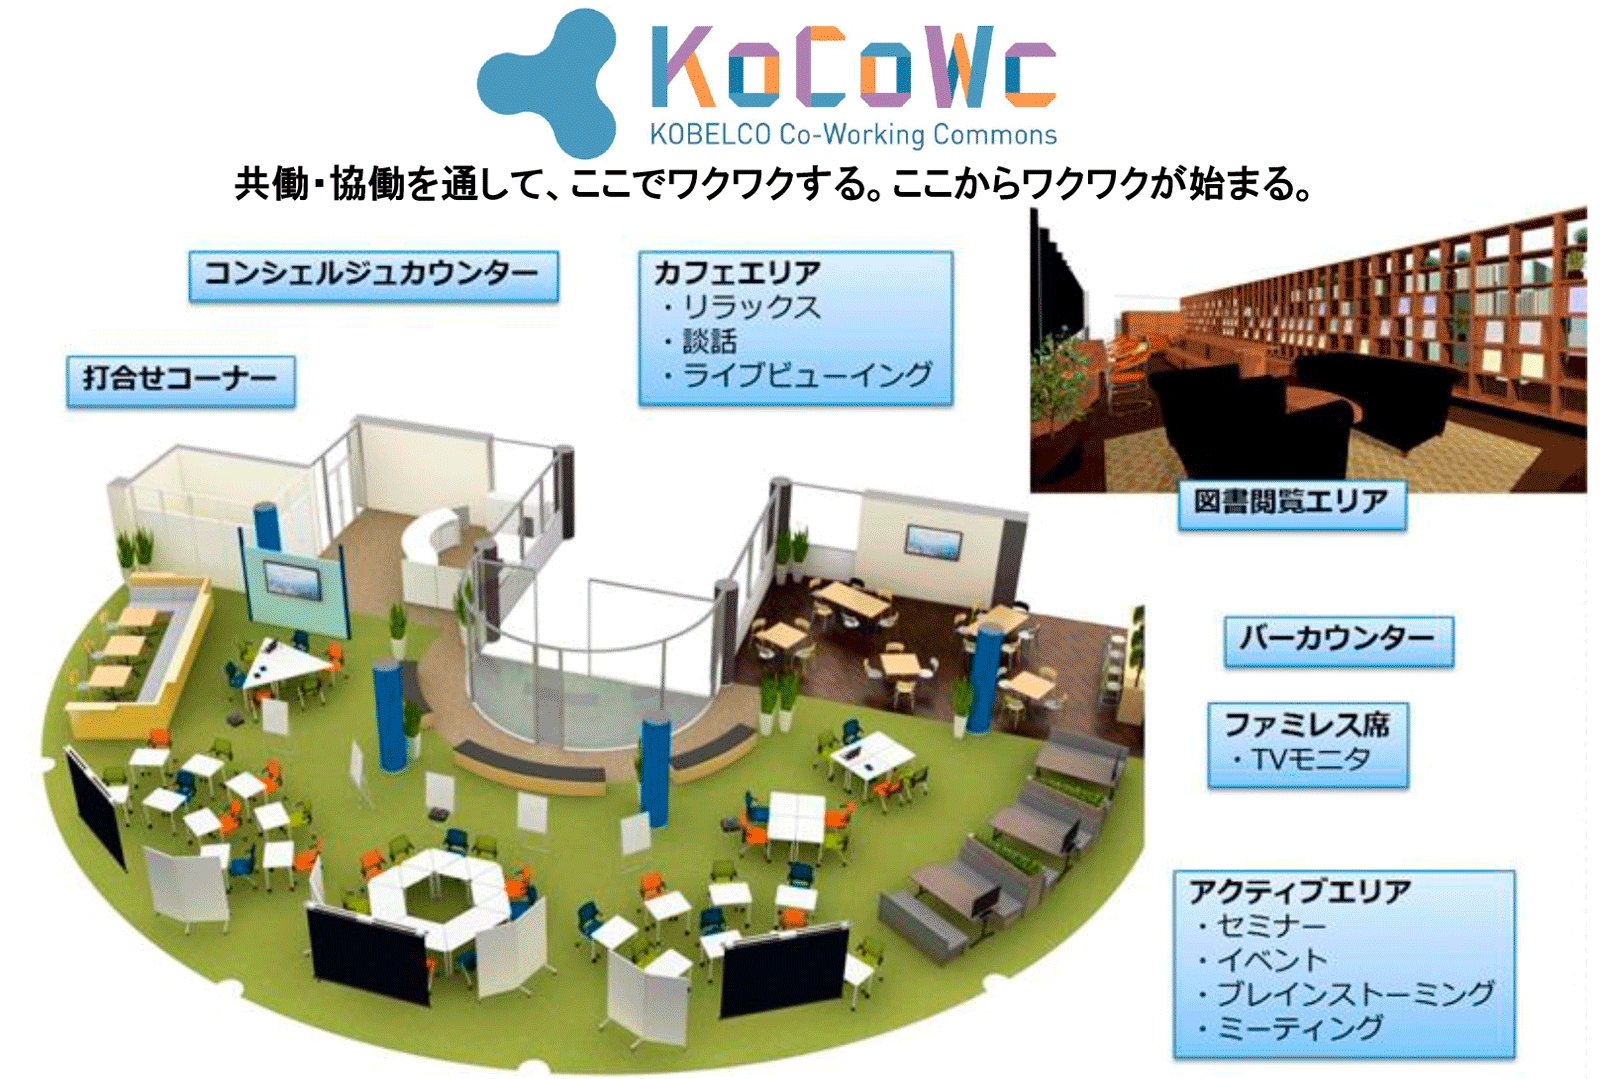 KOBELCO Co-Working Commons（KoCoWc ここわく）